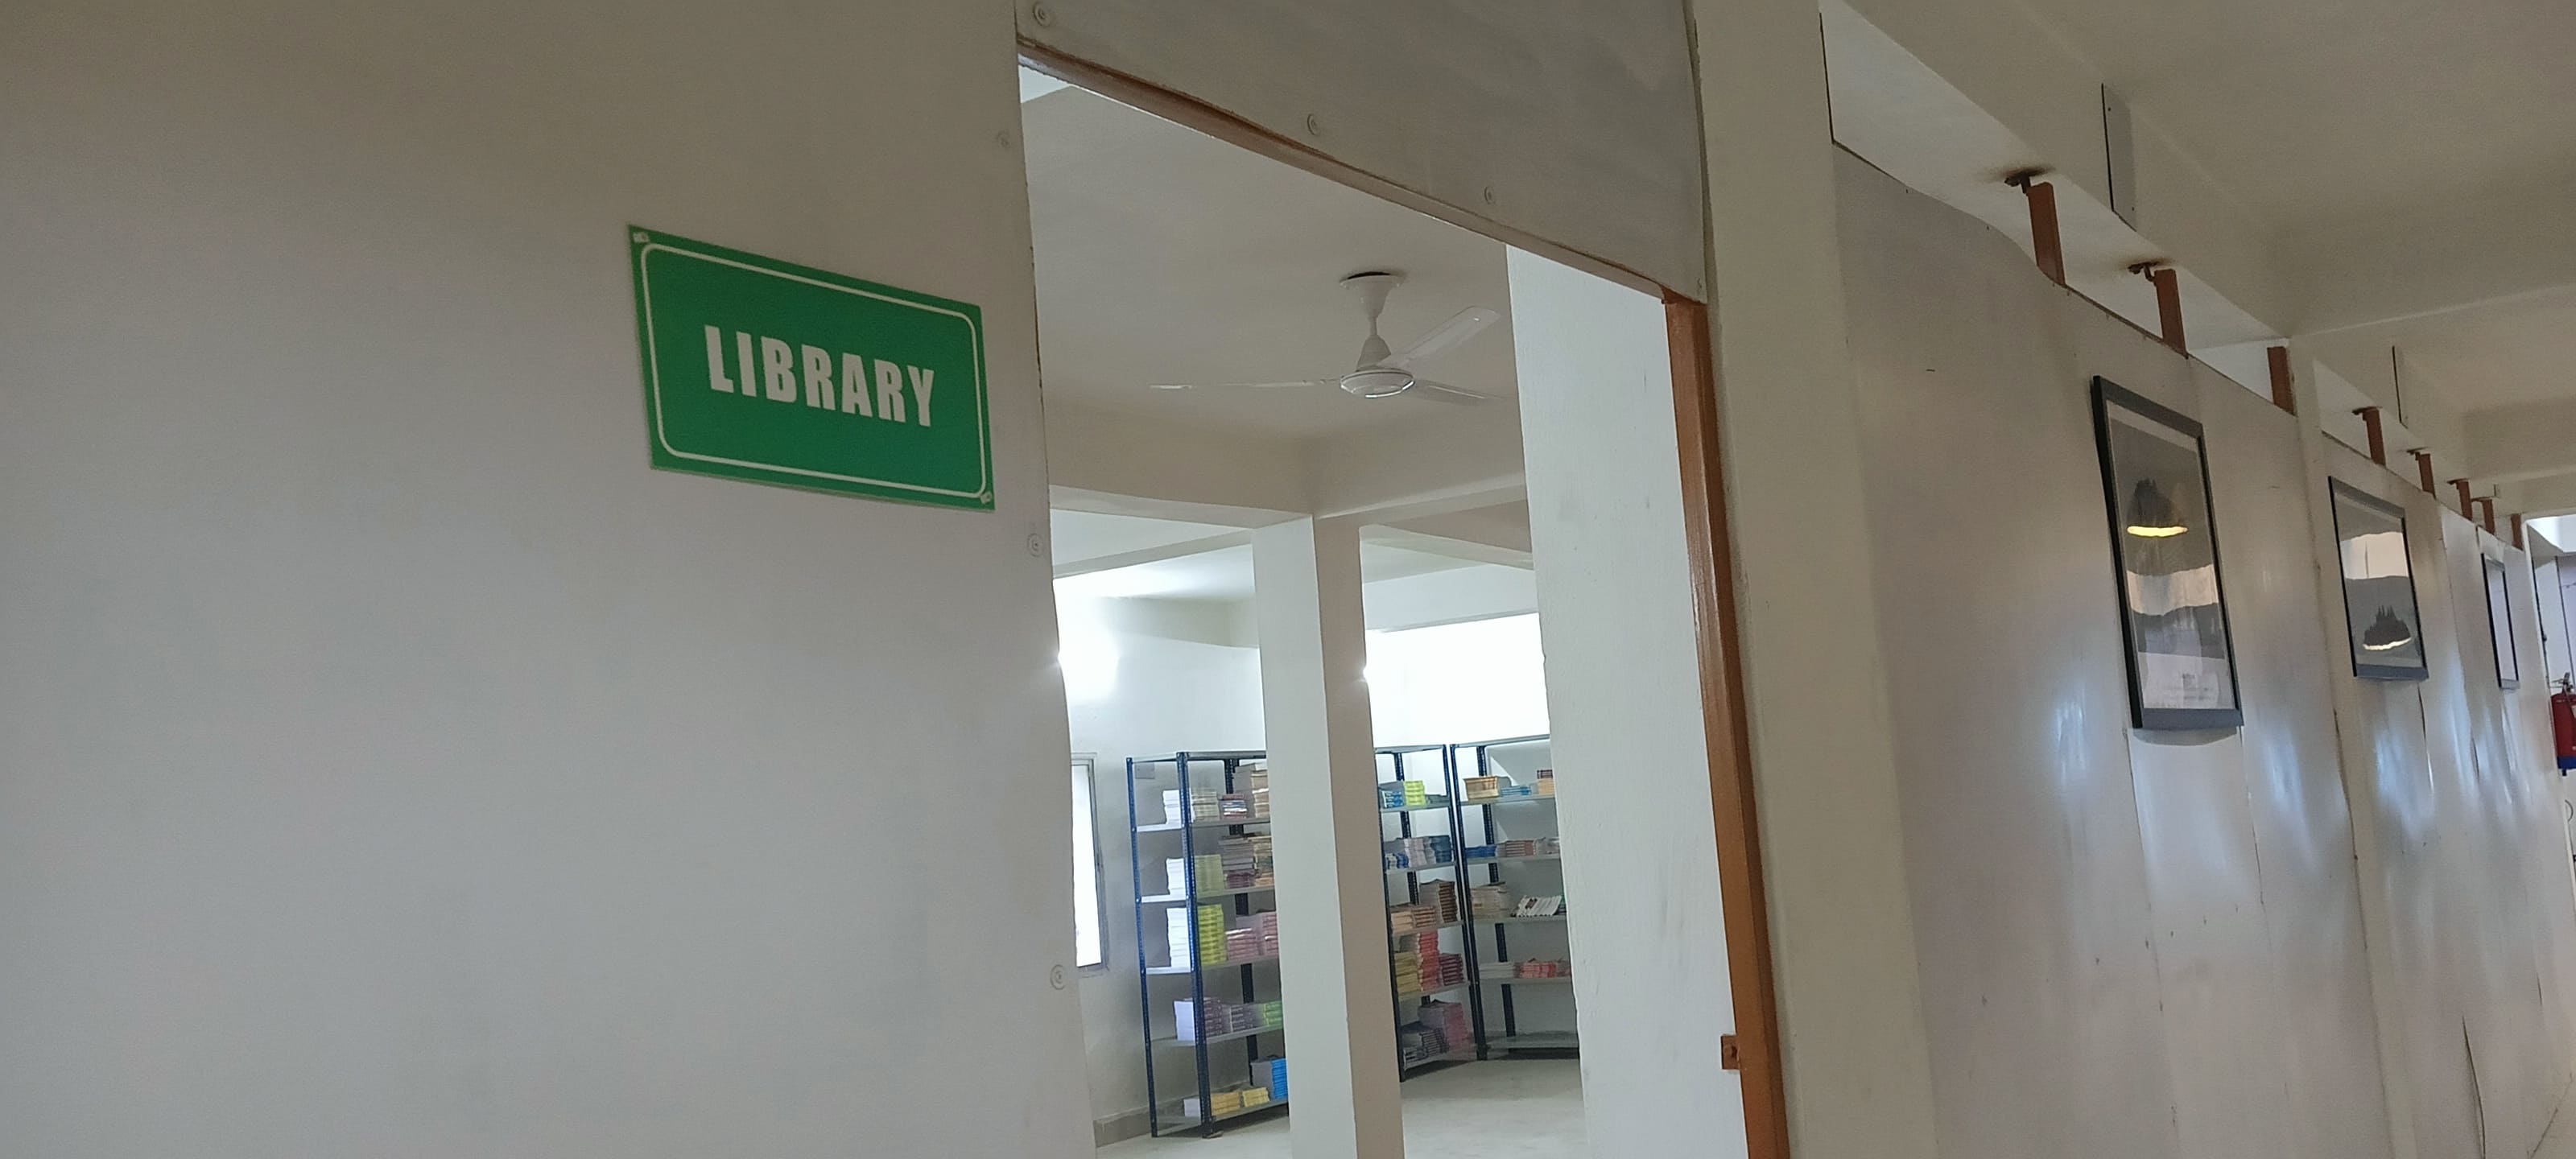 AHS Nursing College Library